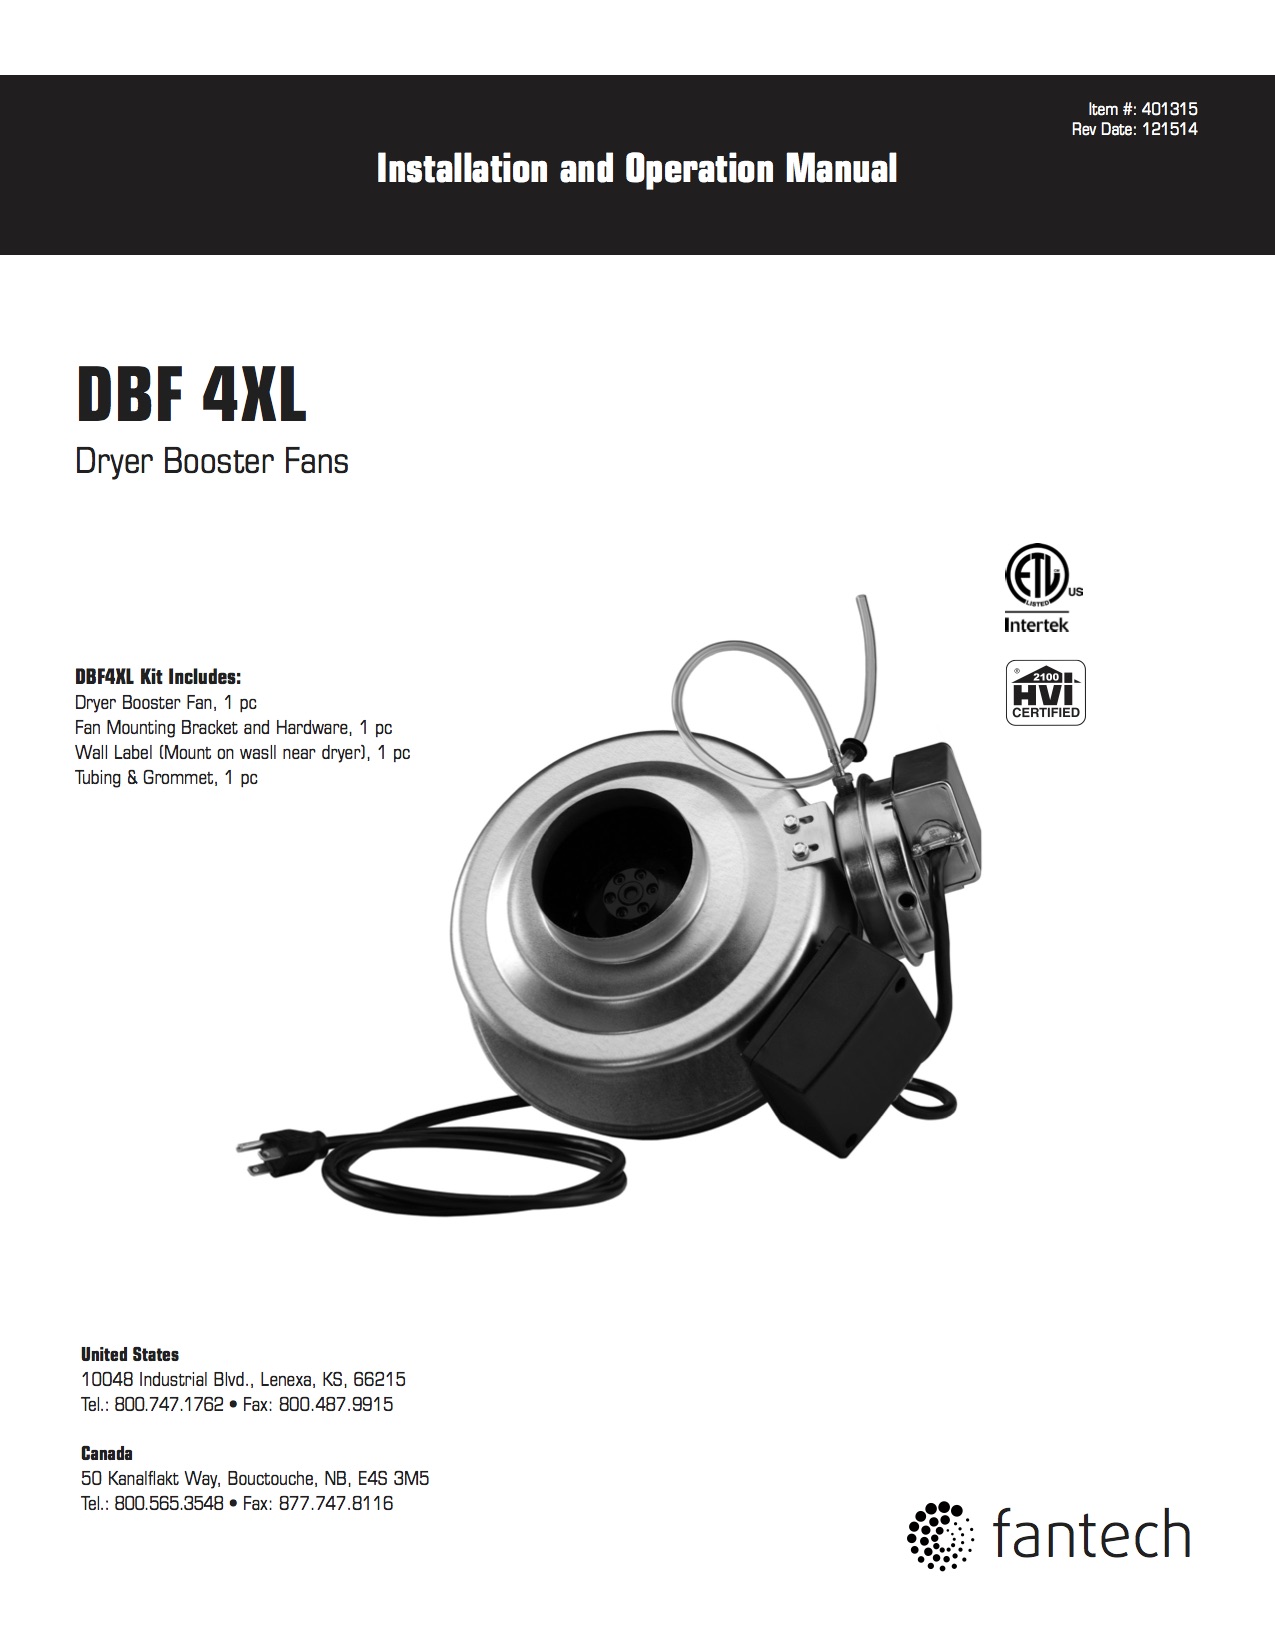 DBF 4XLT Duct Booster Fan - Fans & accessories - Fantech